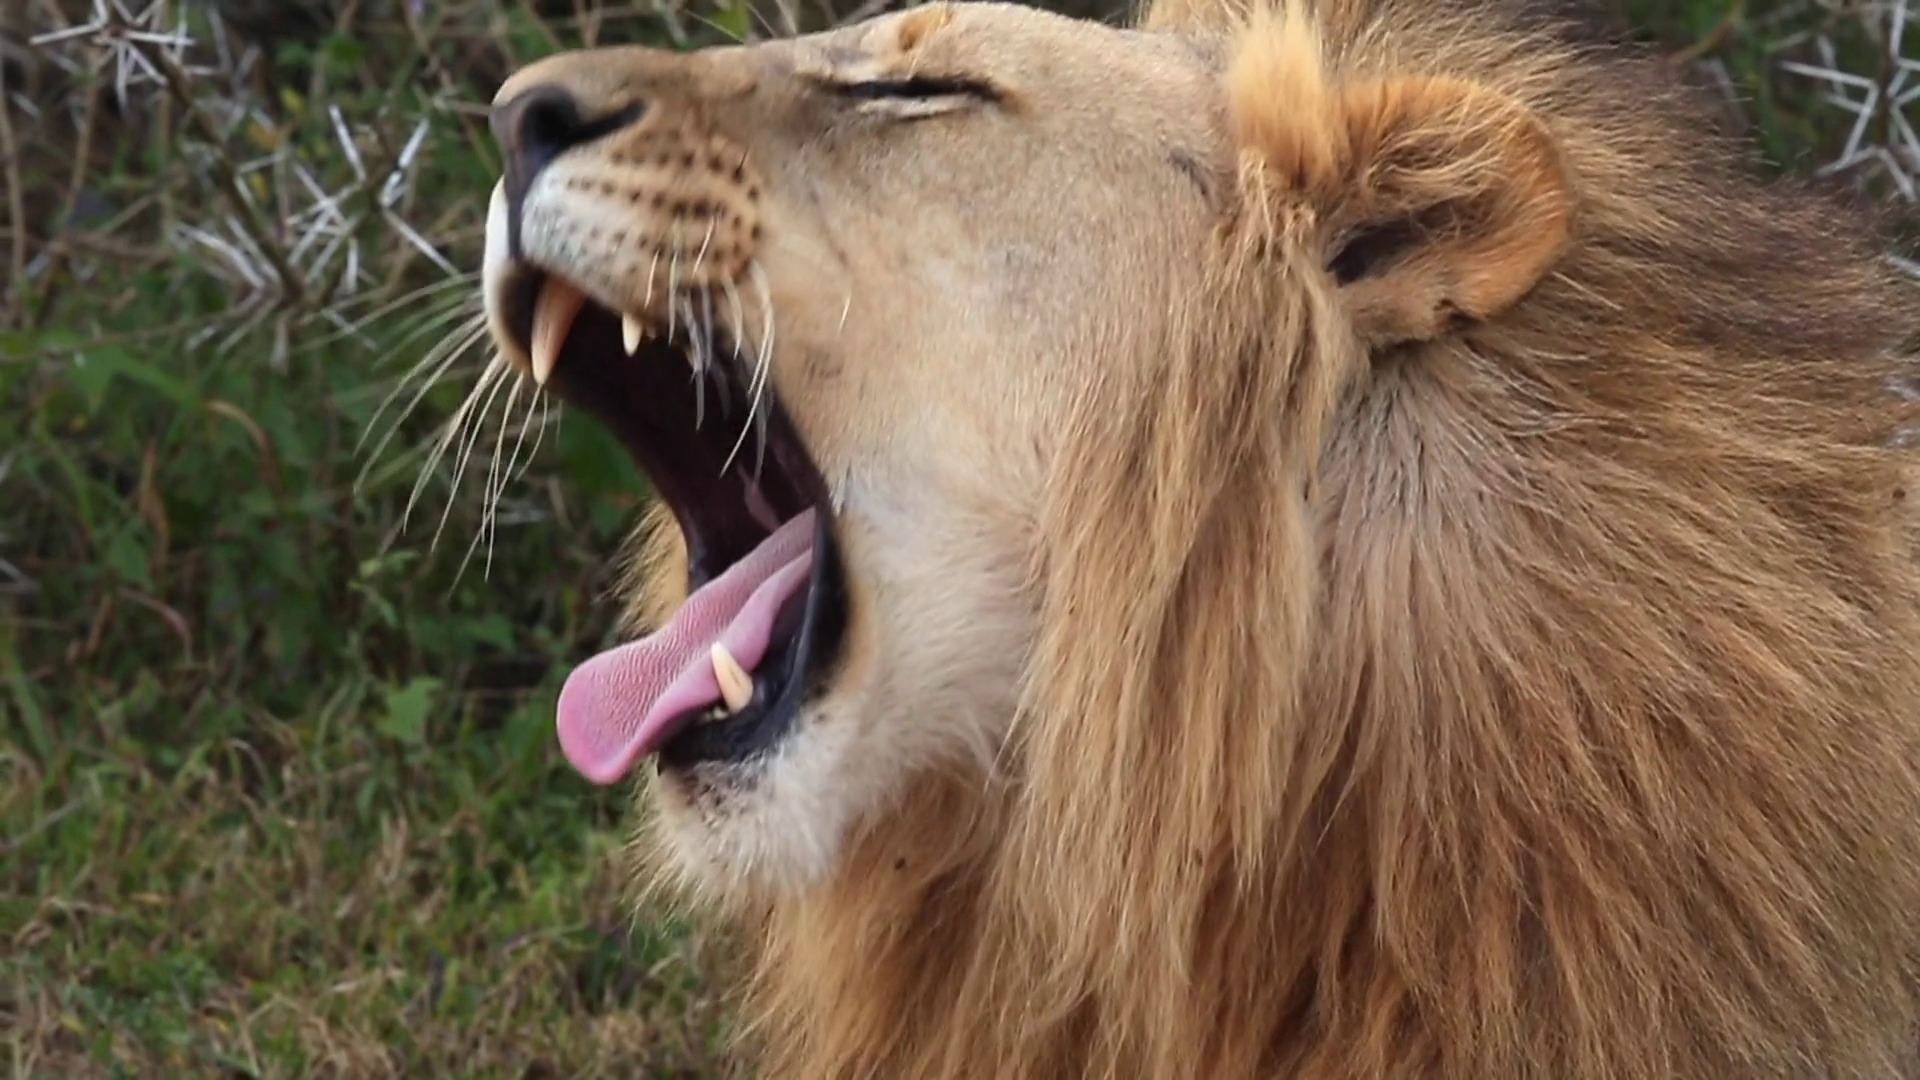 Sleepy Lion Yawning Stock Video Footage - VideoBlocks